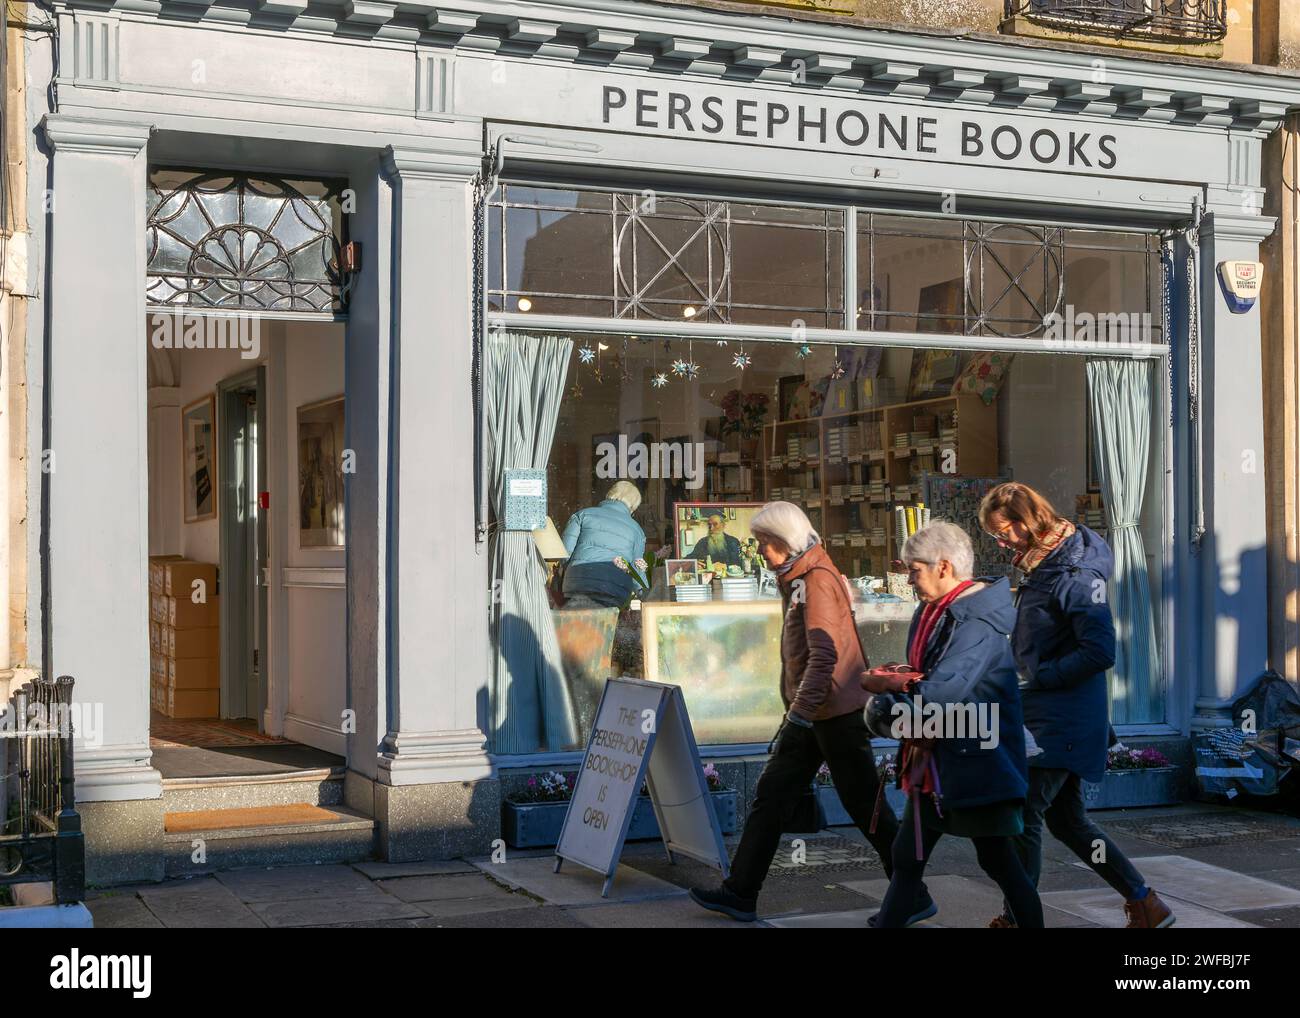 Persephone Books bookshop, Edgar Buildings, Bath, Somerset, England, UK Stock Photo